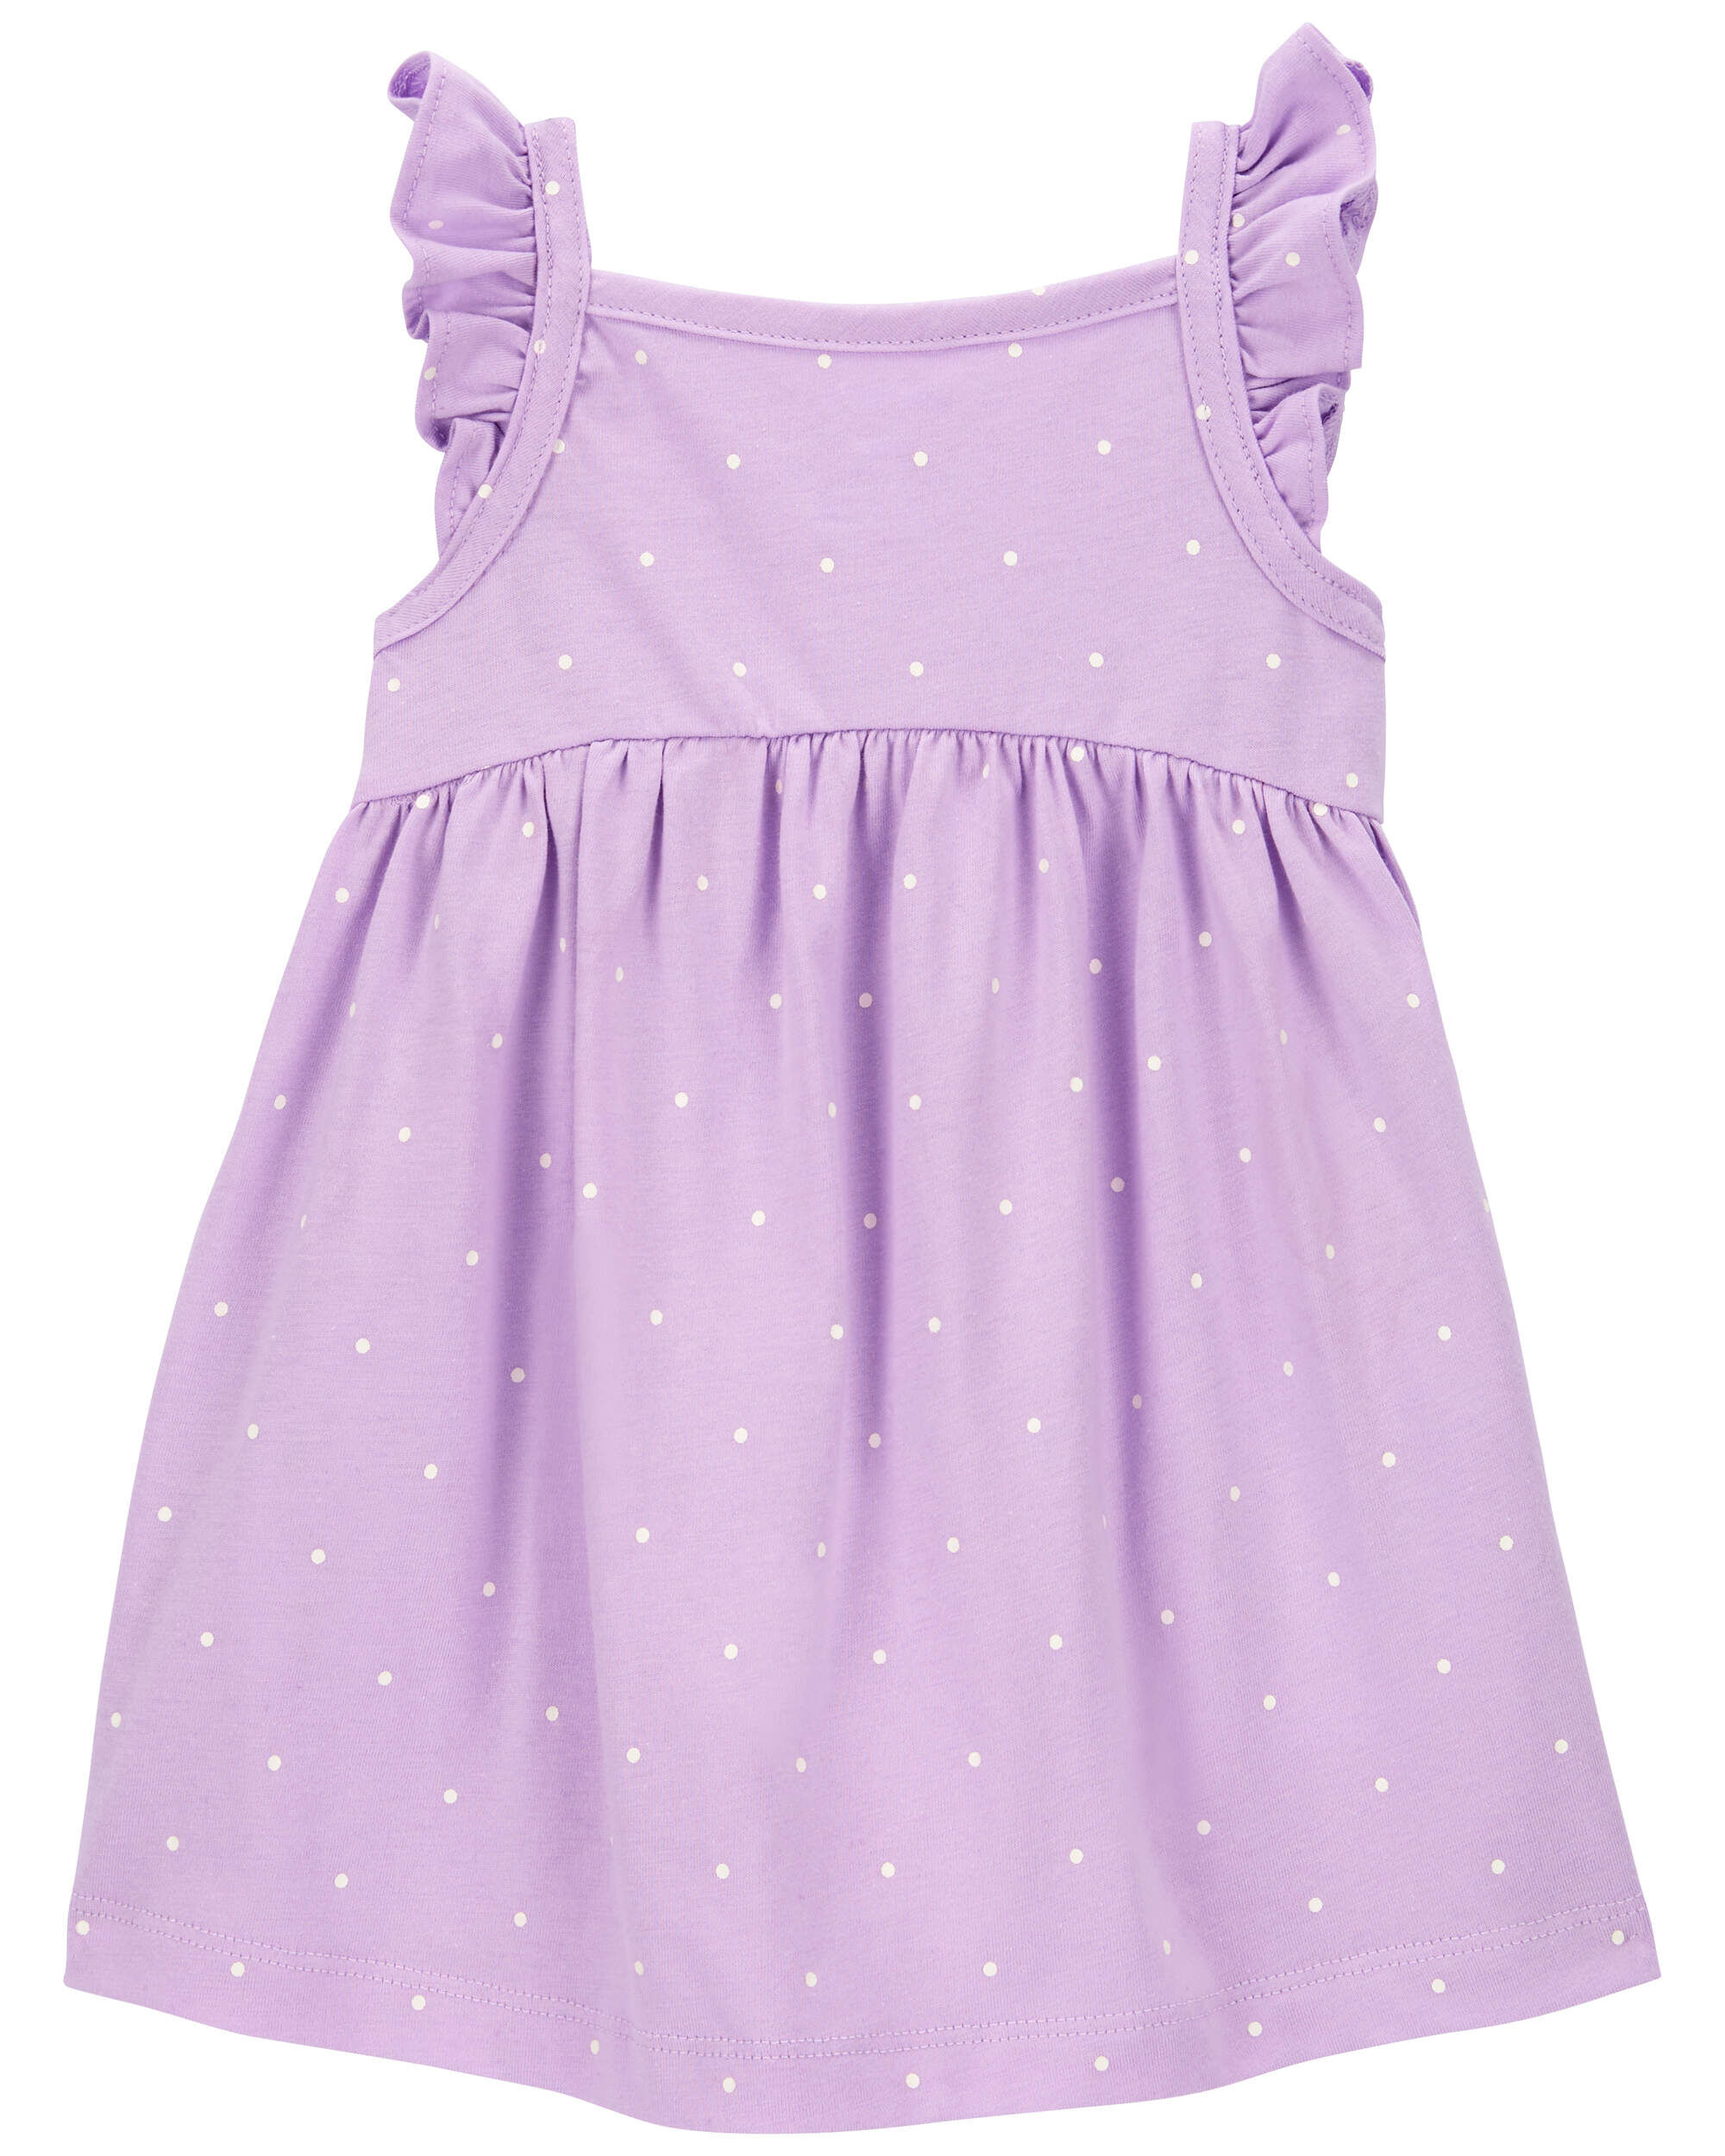 Butterfly embellished baby girls birthday dress – Choosify